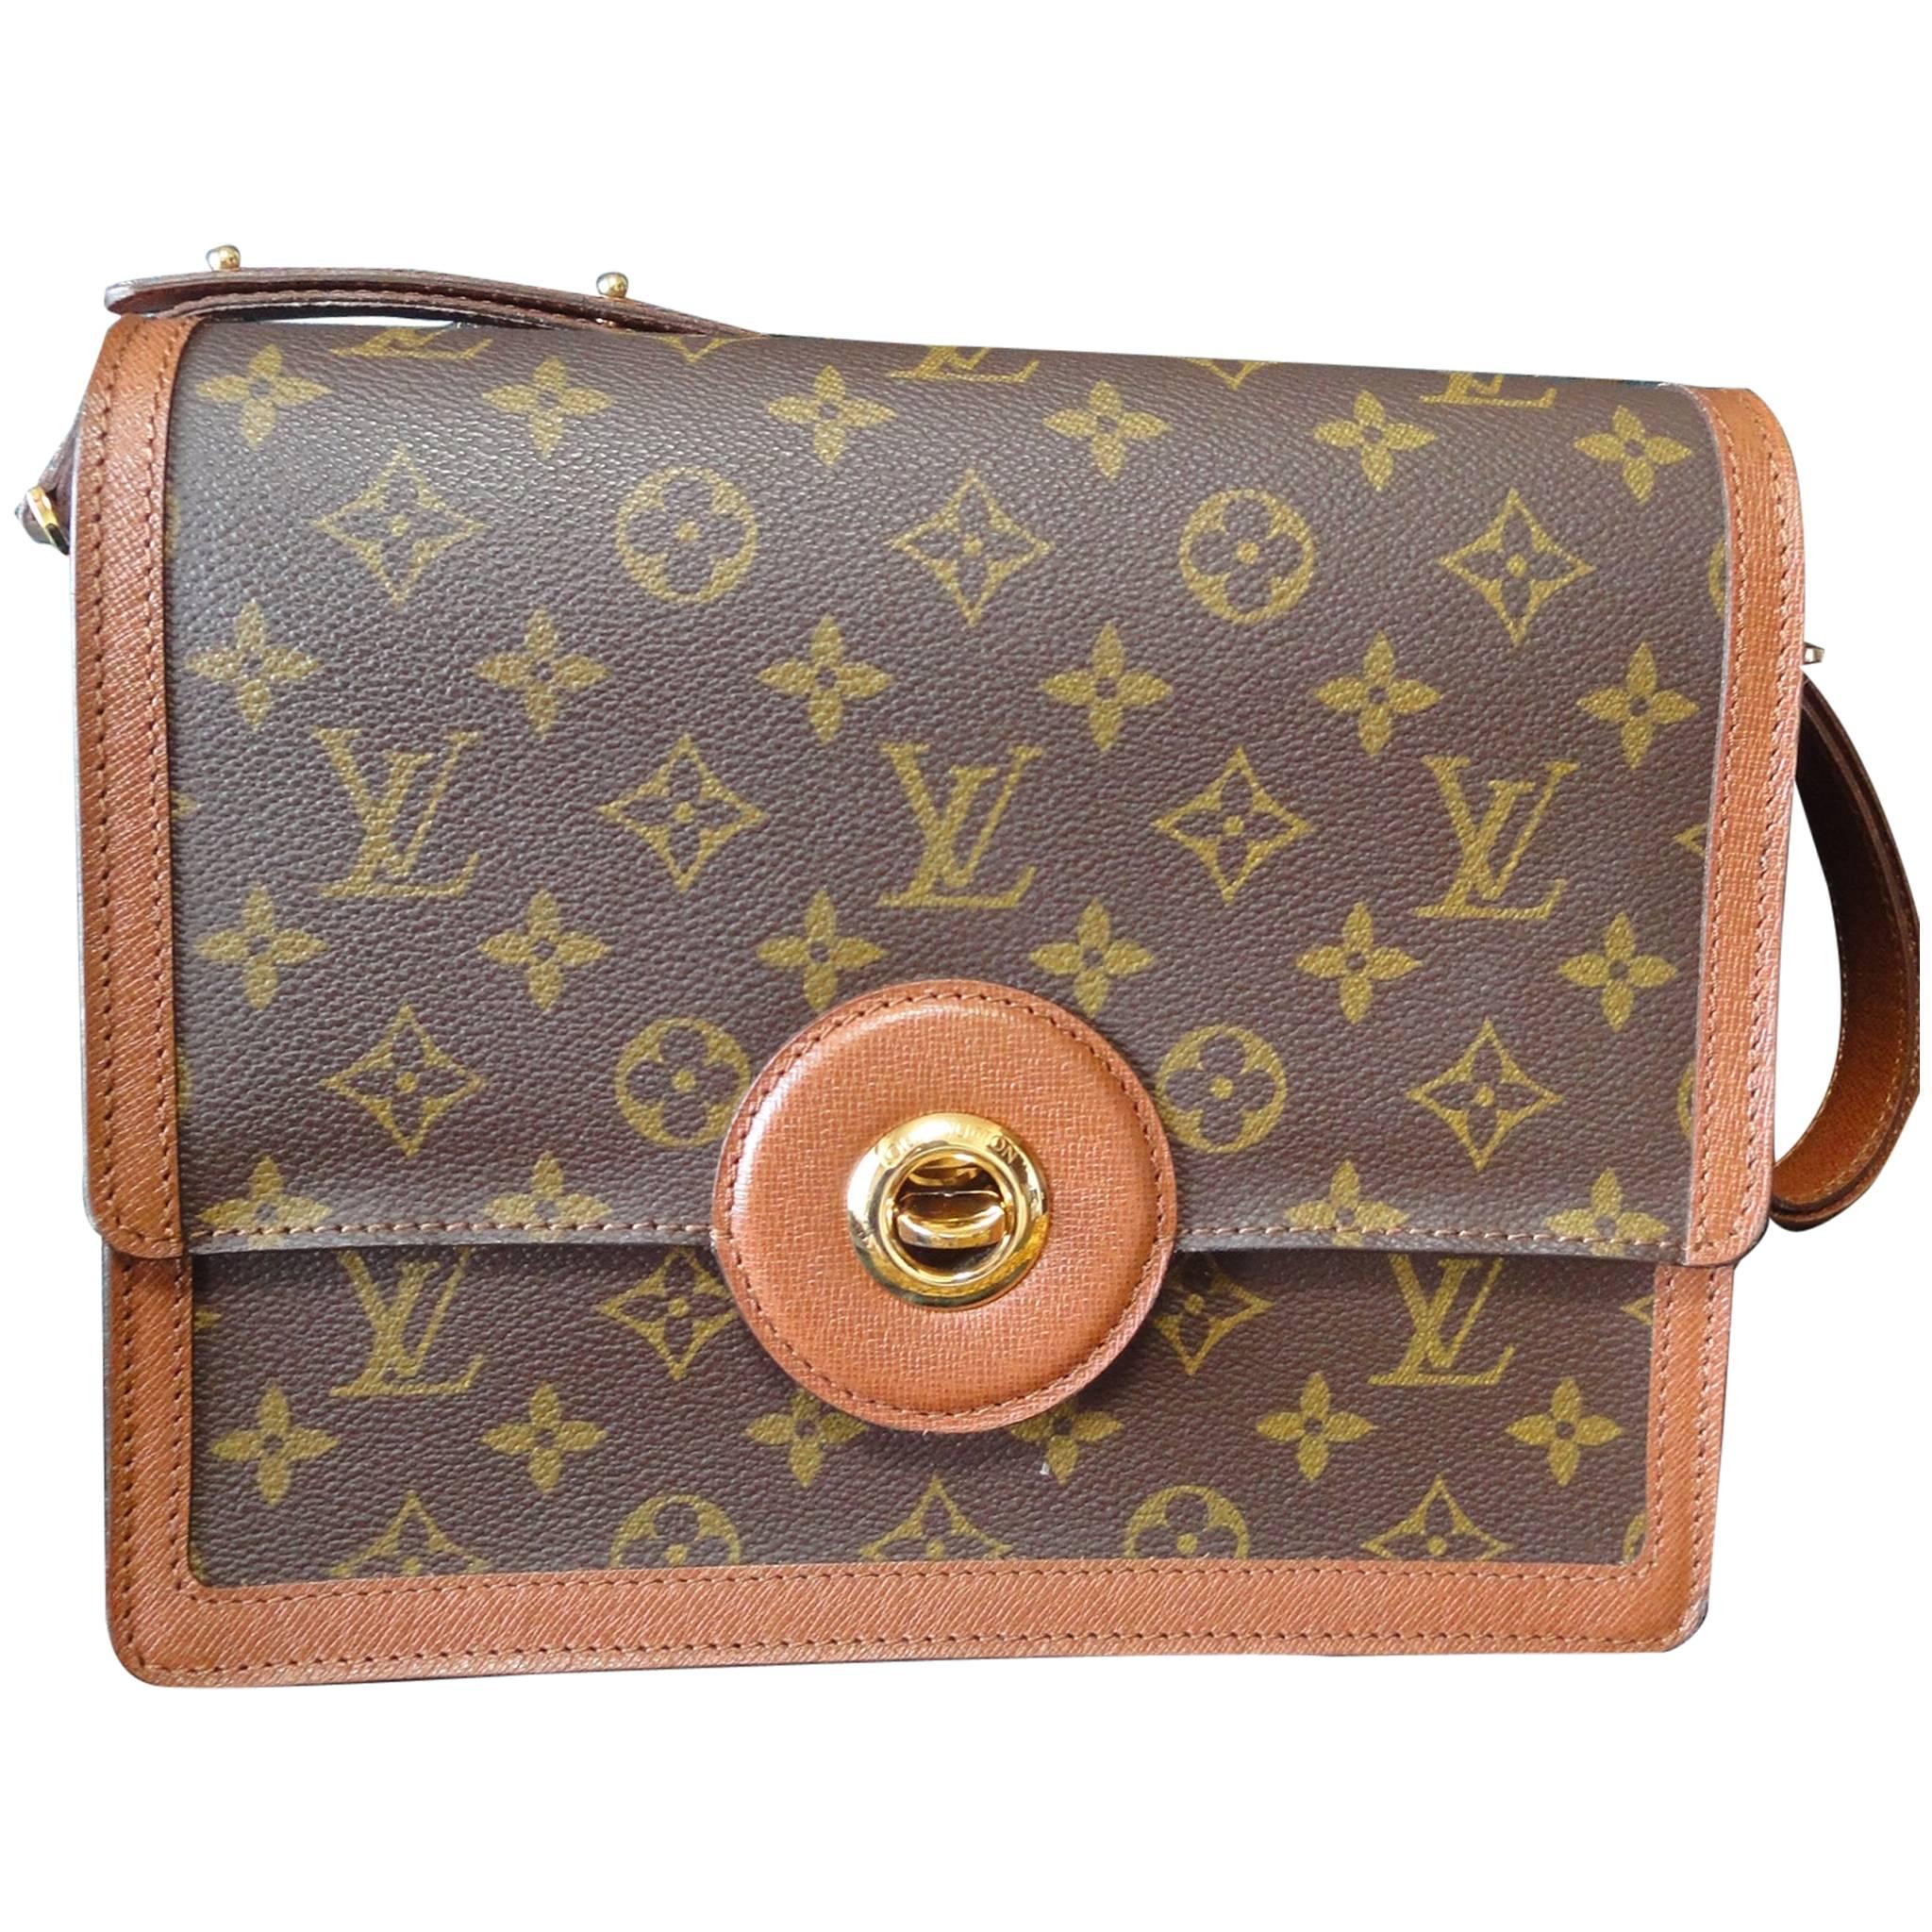 Vintage Louis Vuitton rare brown and monogram shoulder purse with bullet eye